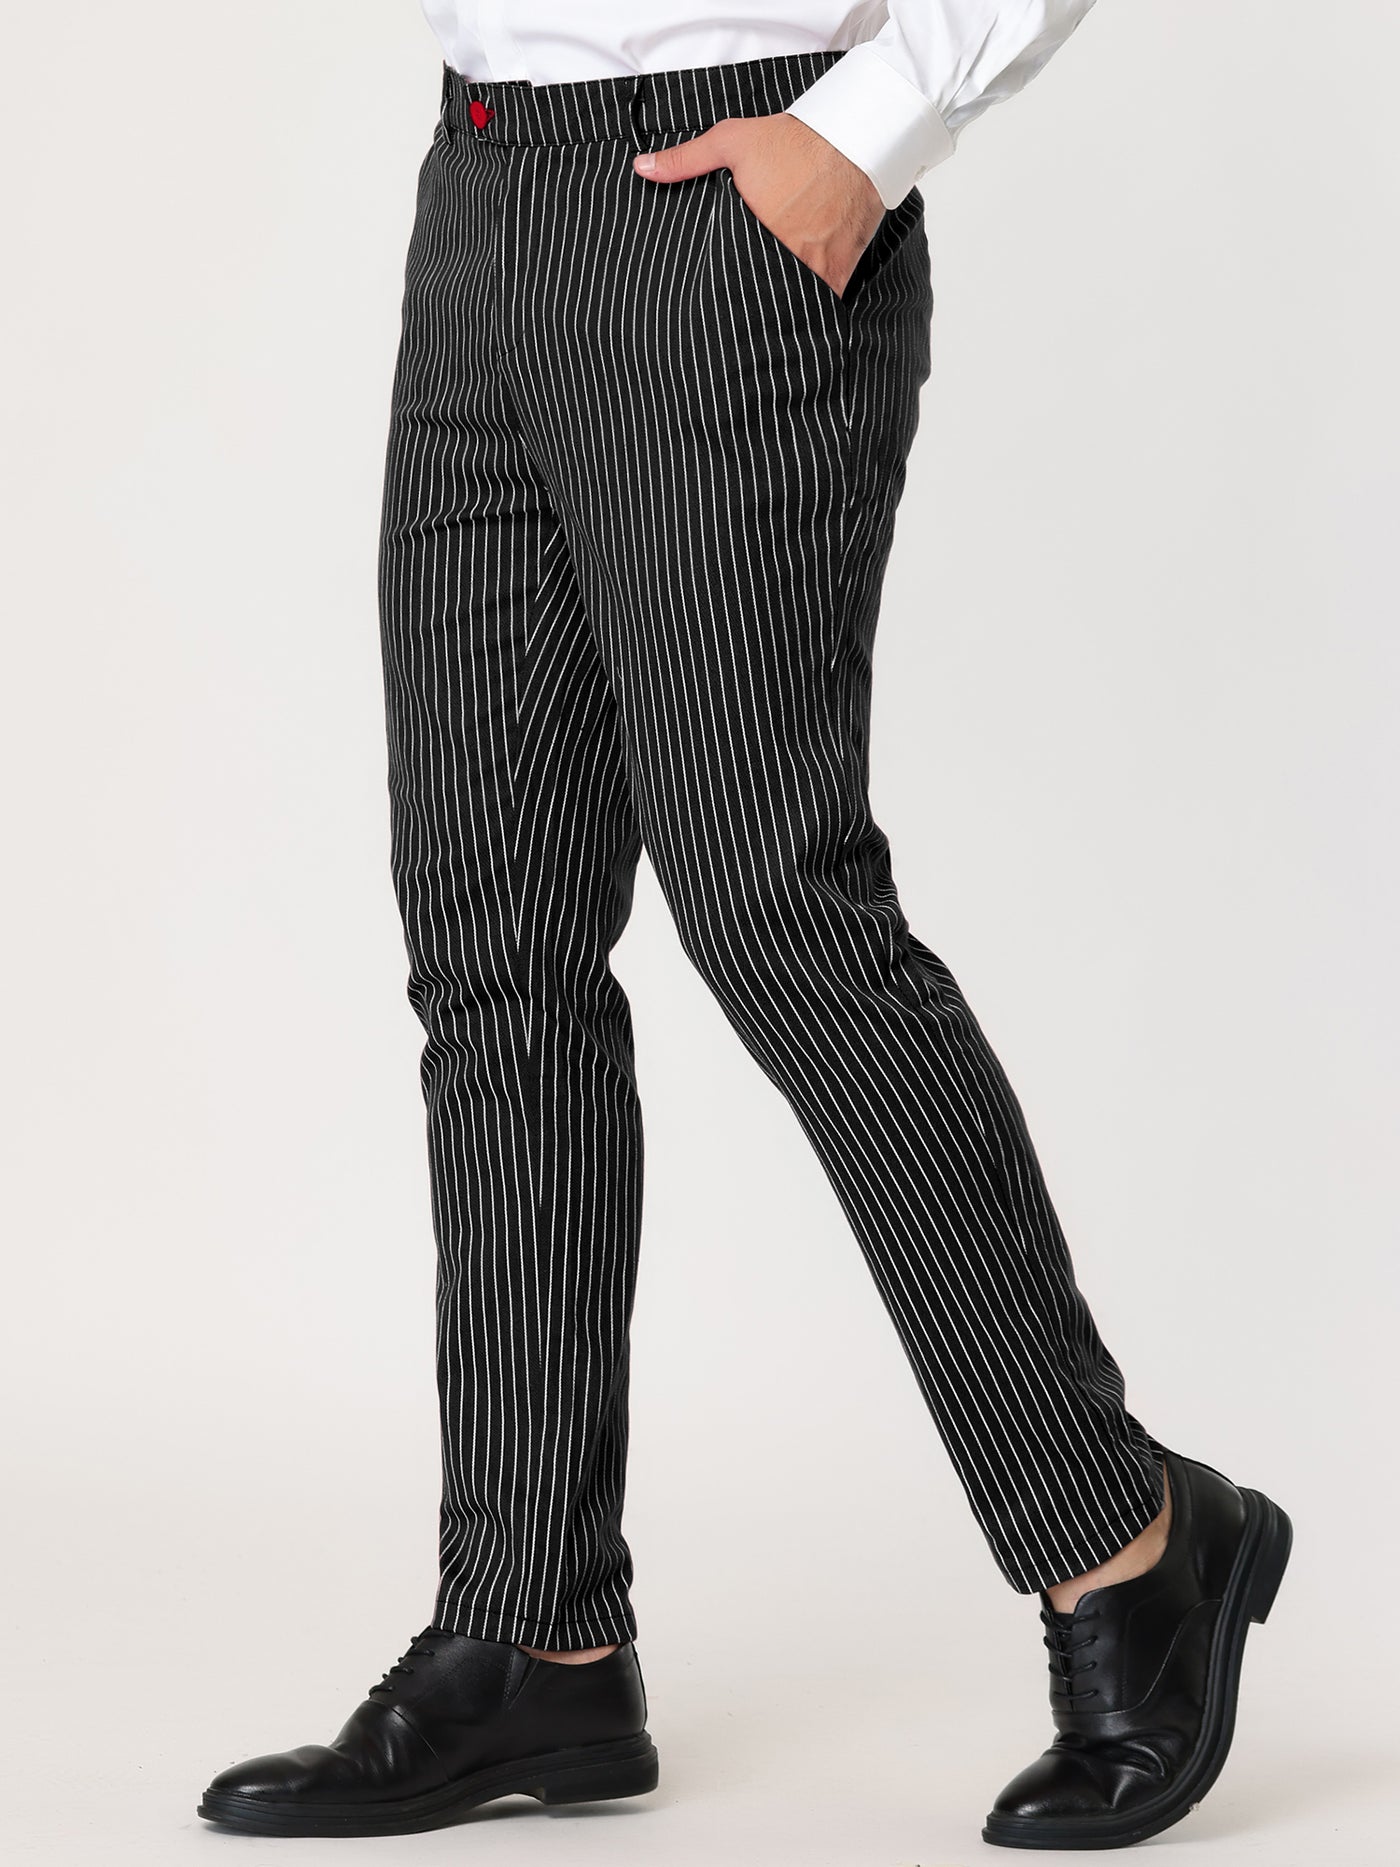 Bublédon Striped Formal Business Prom Dress Pants For Men